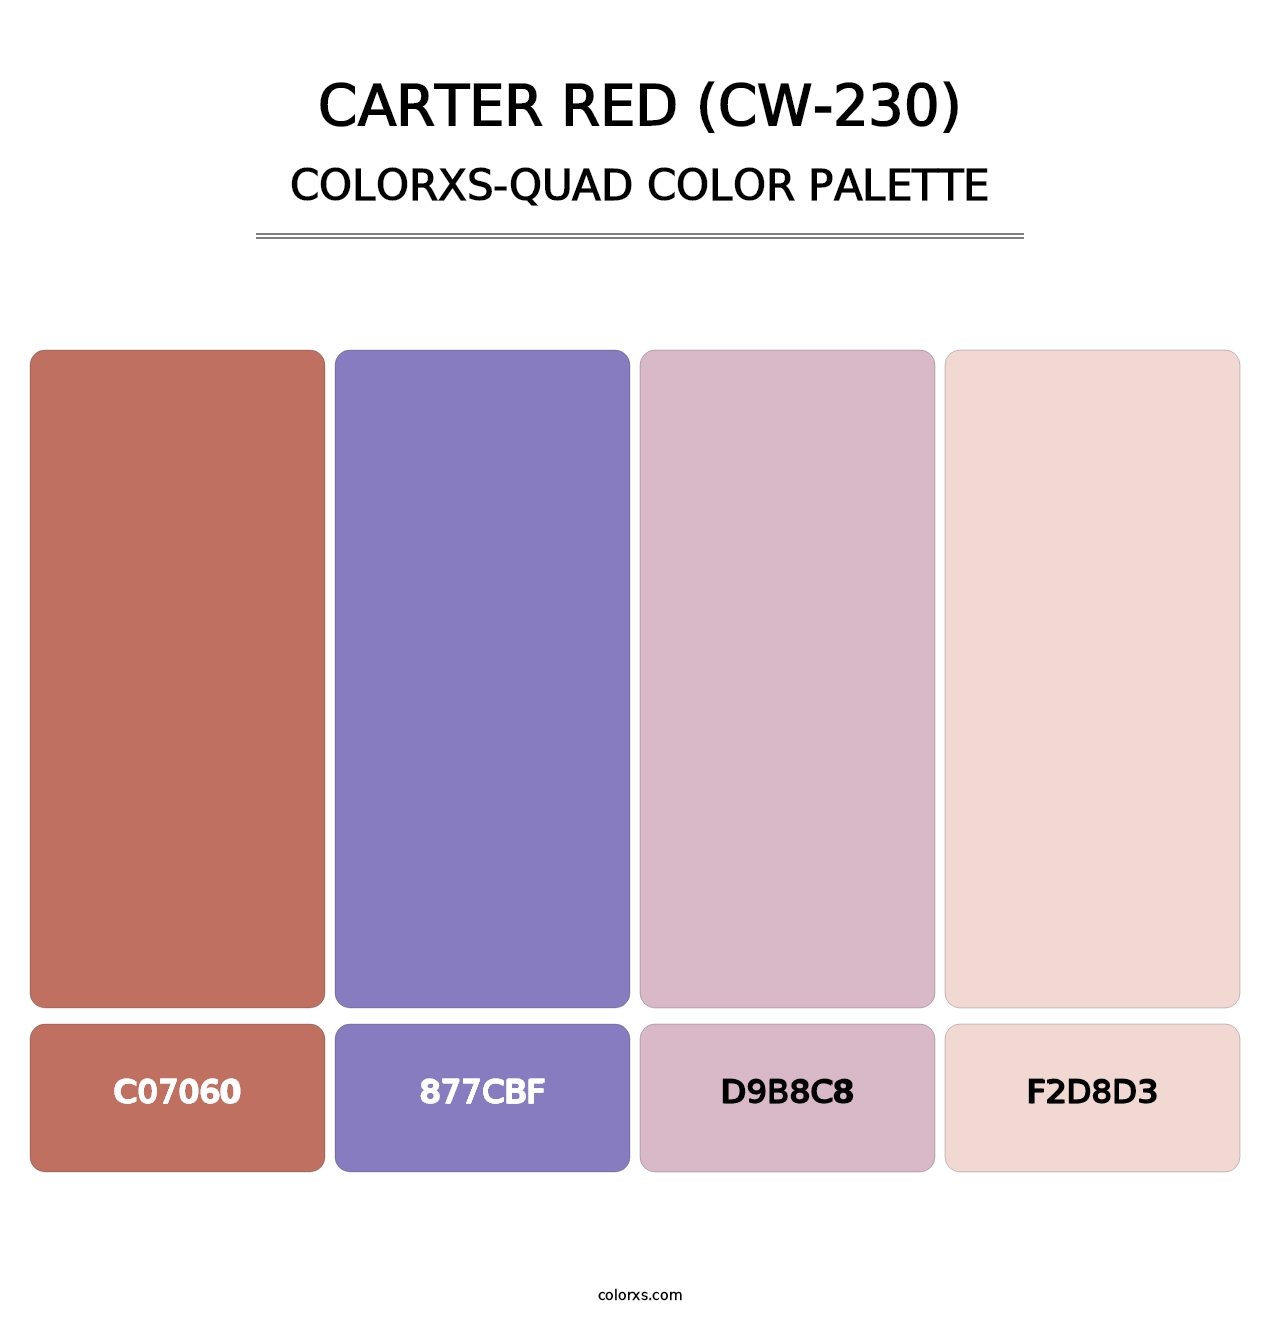 Carter Red (CW-230) - Colorxs Quad Palette